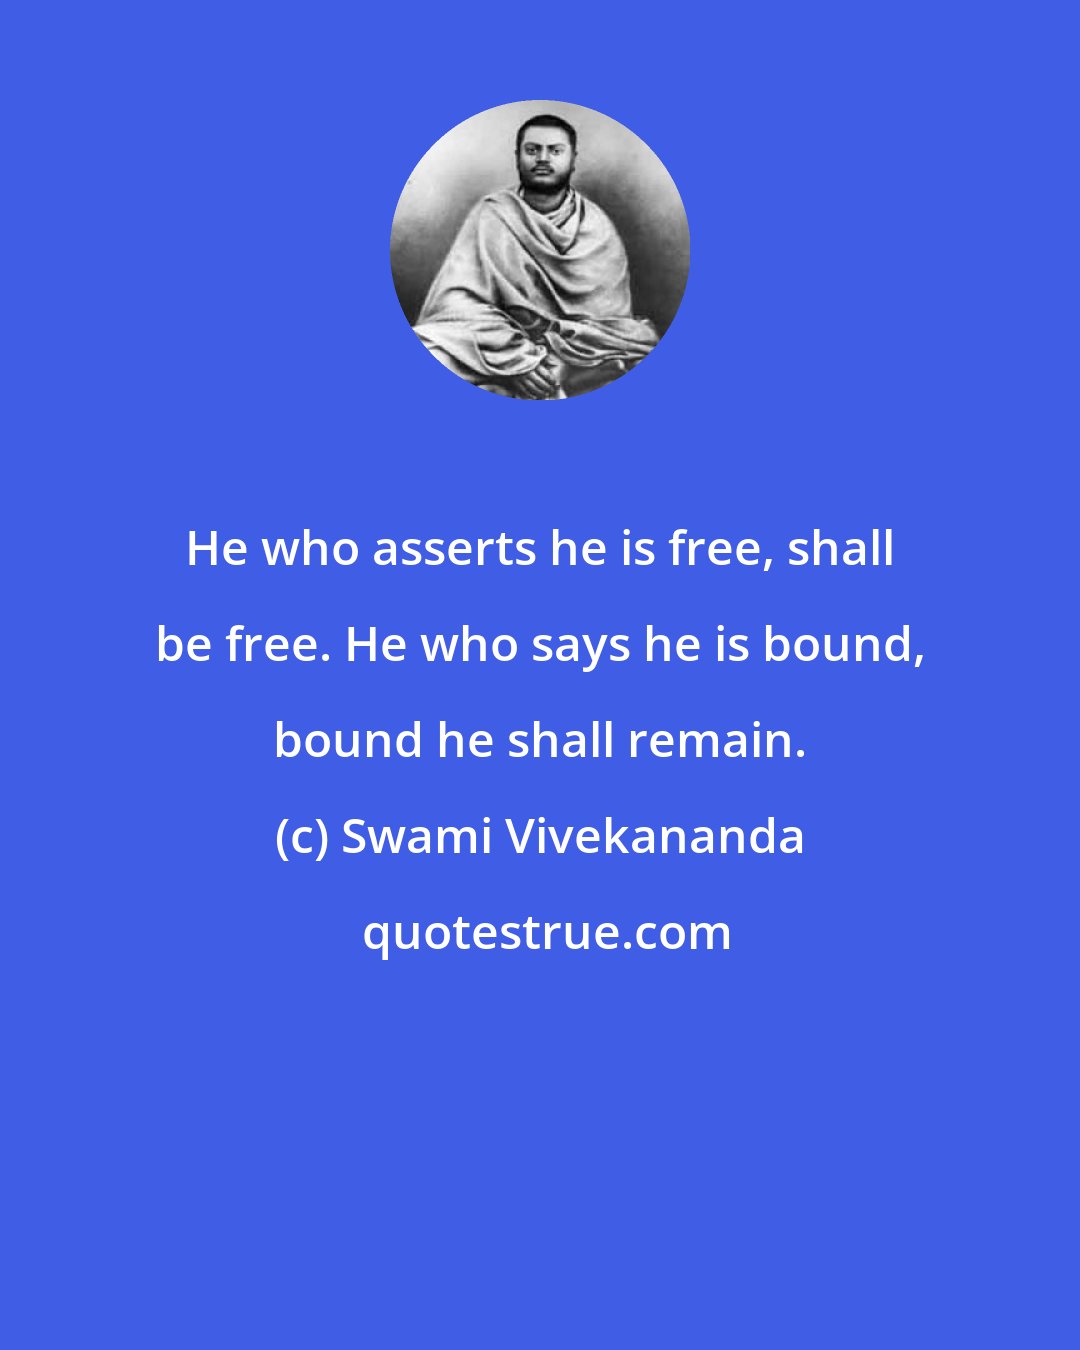 Swami Vivekananda: He who asserts he is free, shall be free. He who says he is bound, bound he shall remain.